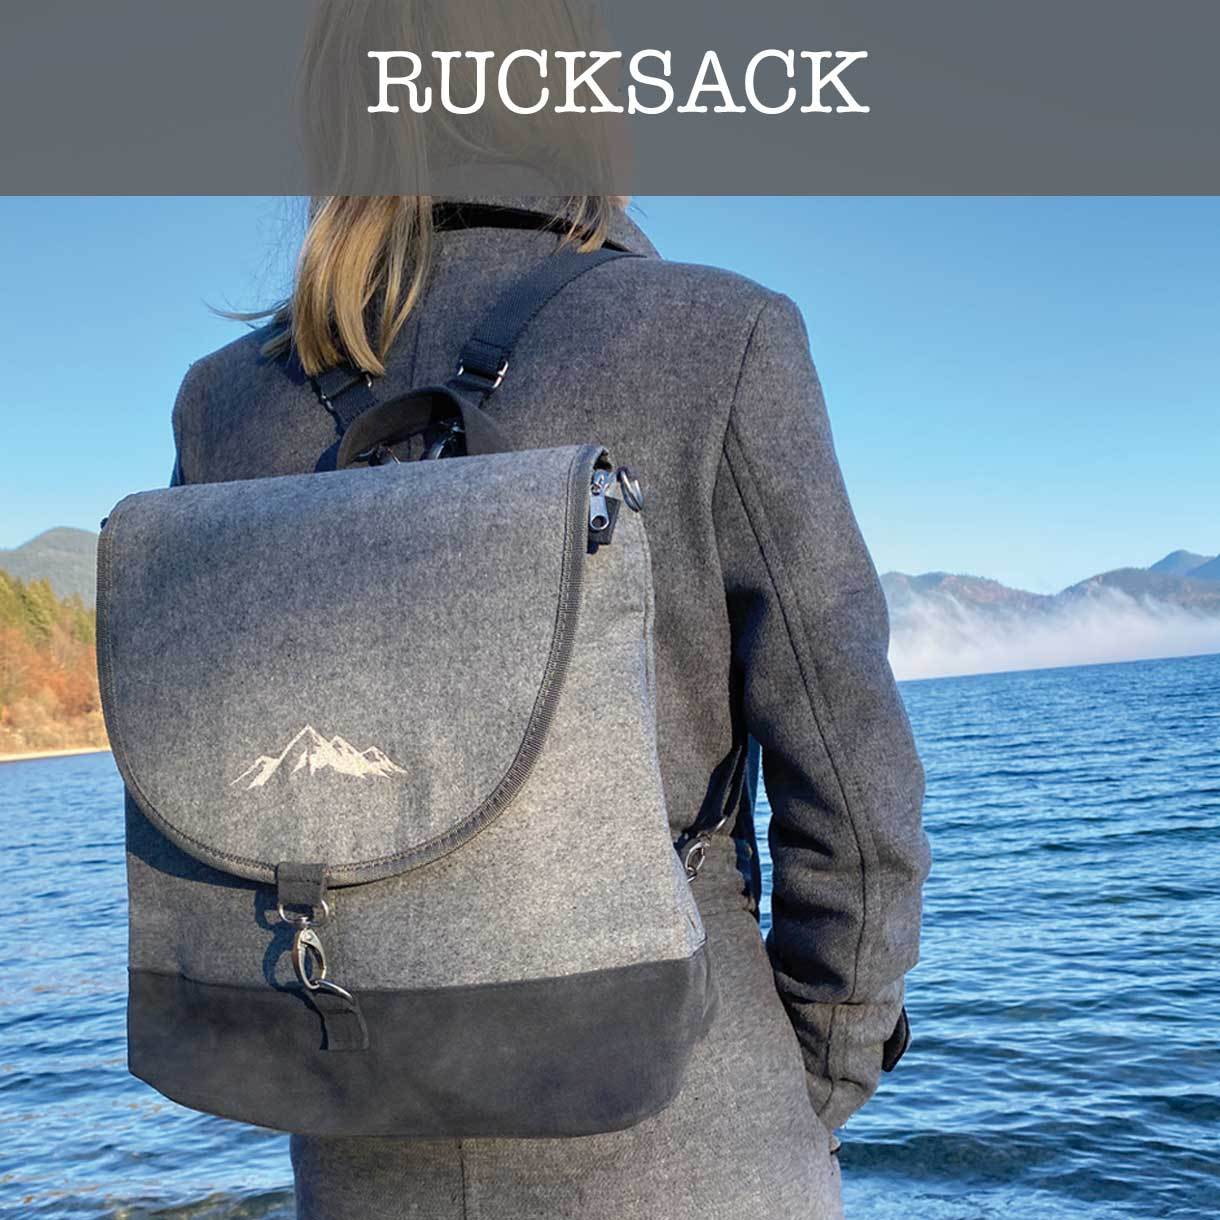 Produkttypen-Rucksack